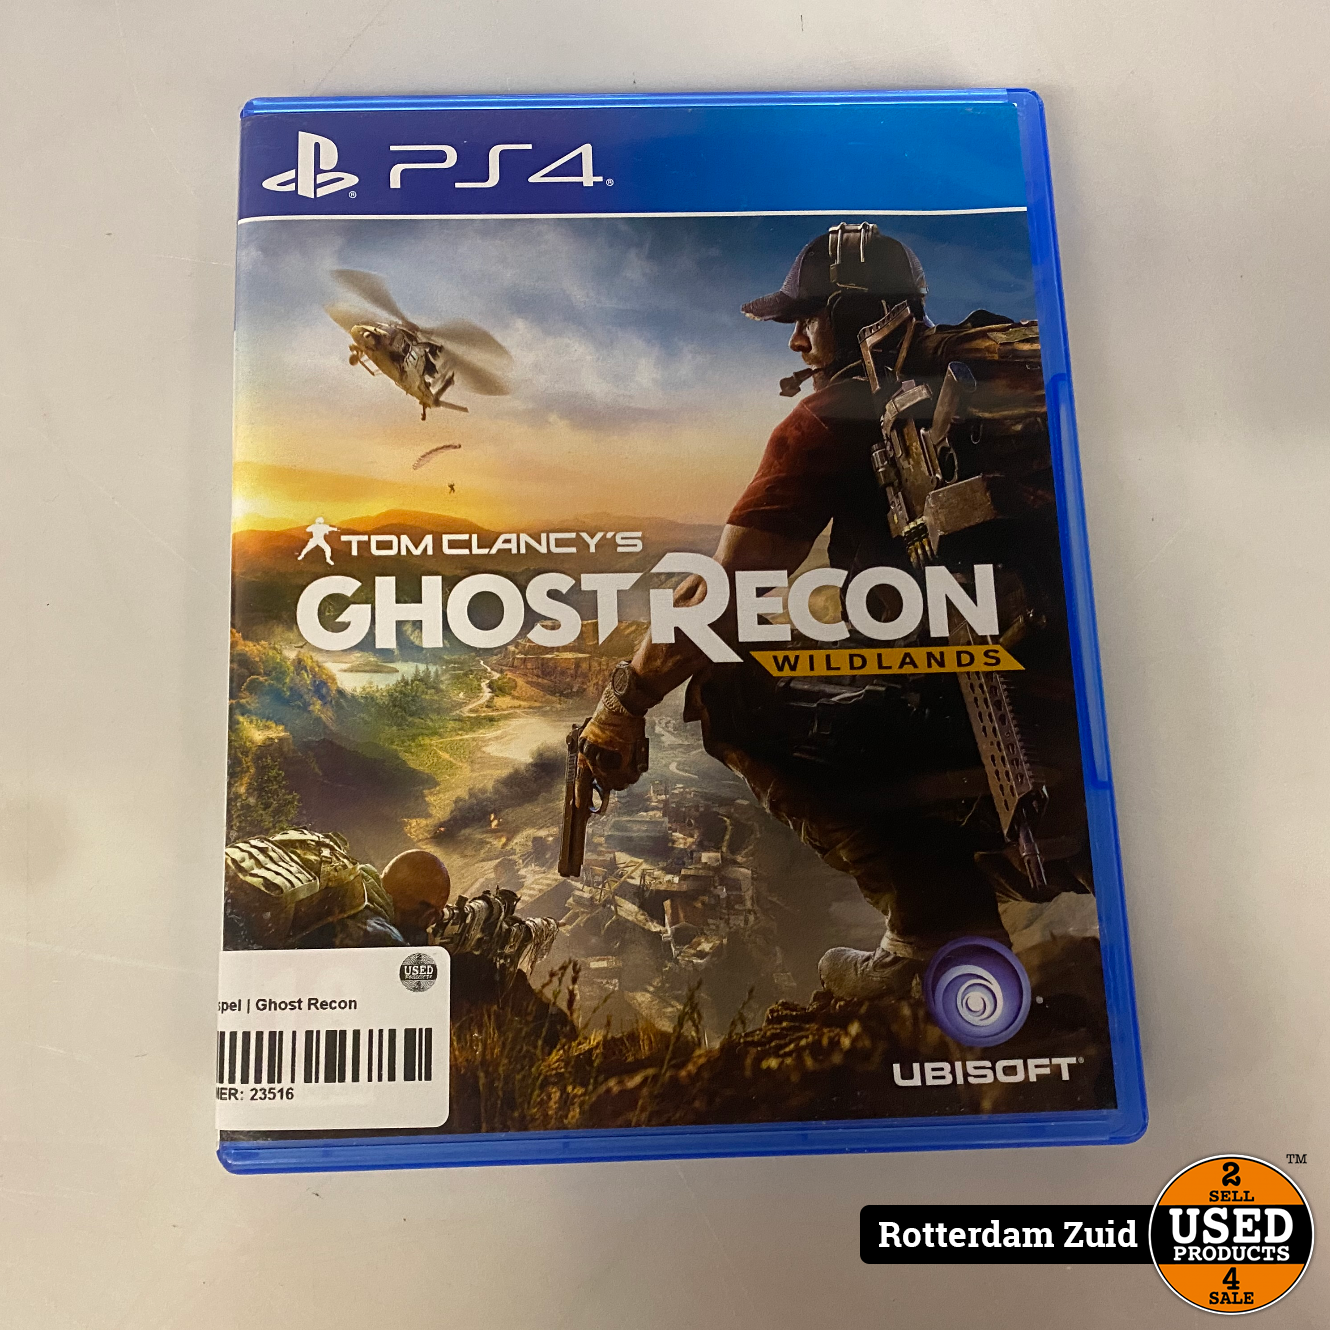 meester Terminologie Articulatie Playstation 4 spel | Ghost Recon Wildlands - Used Products Rotterdam Zuid